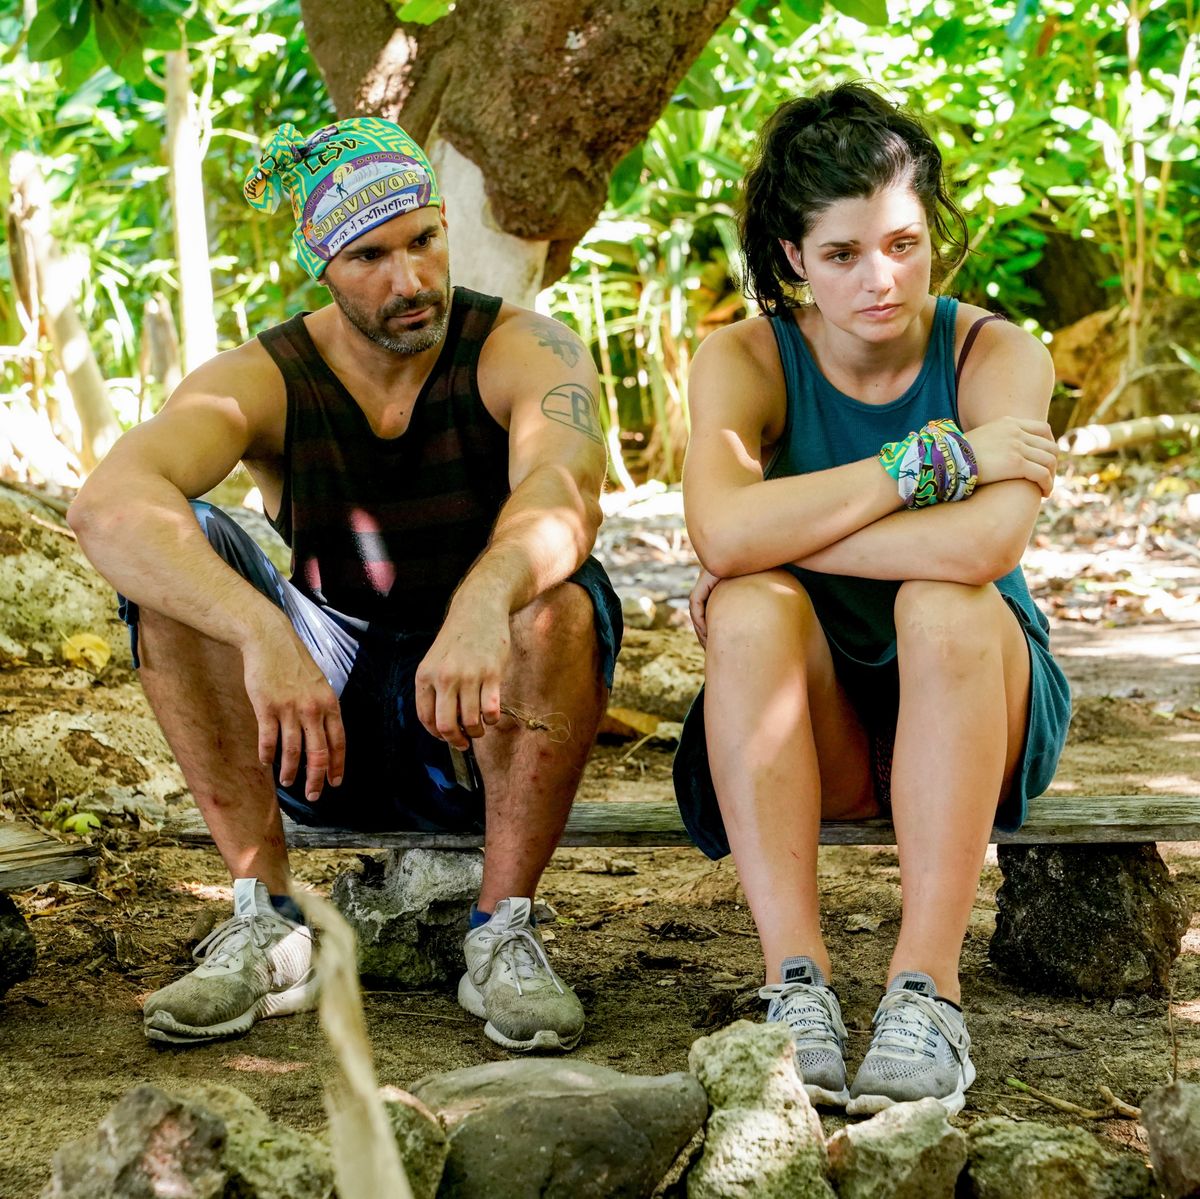 Survivor Season 42 Cast Announced: Meet the 19 Castaways Headed to Fiji